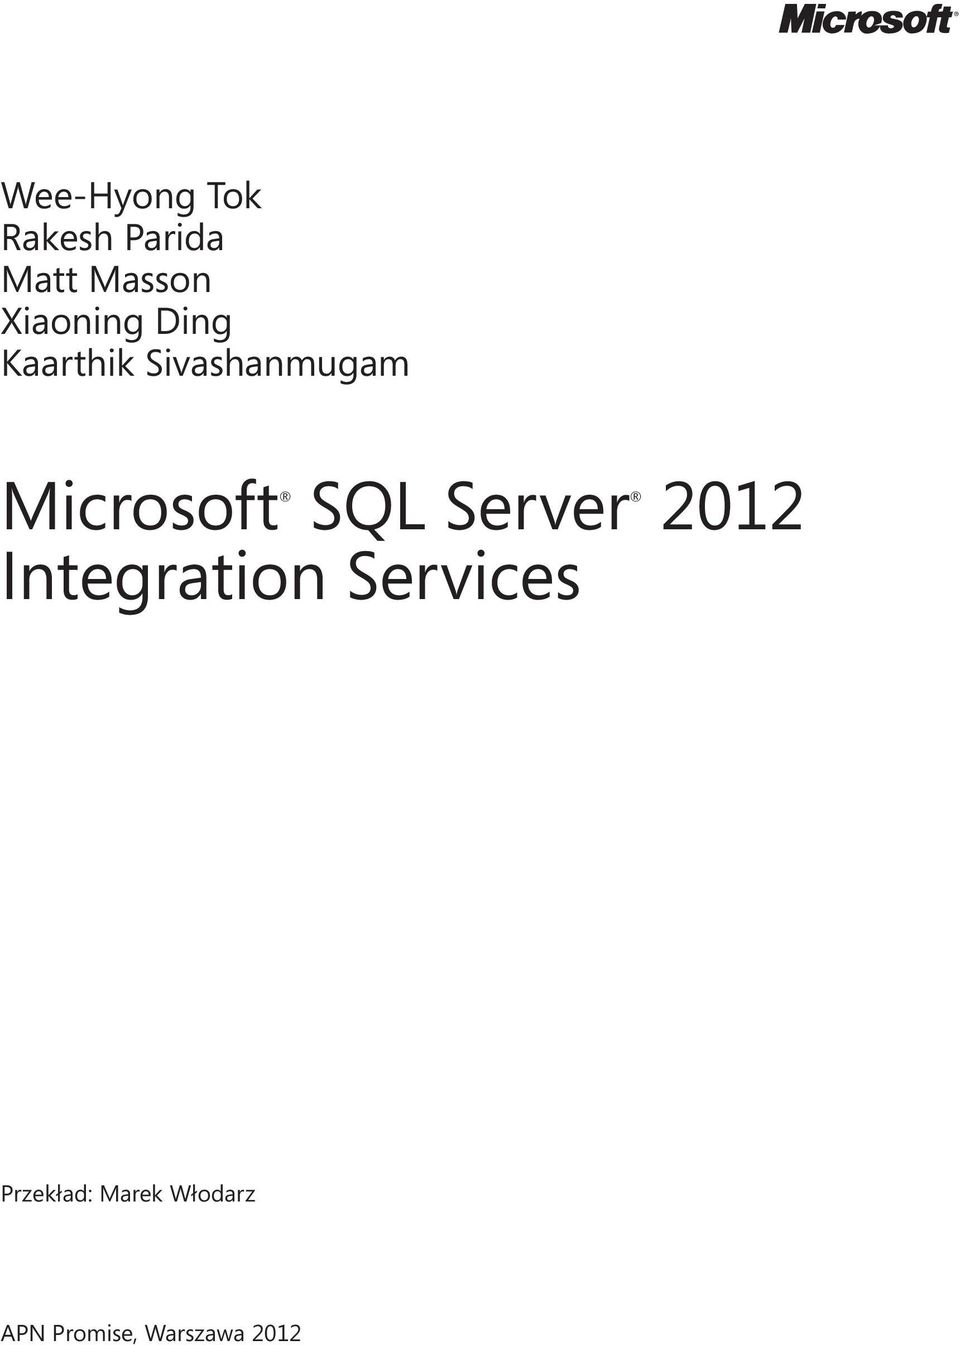 Microsoft SQL Server Integration Services